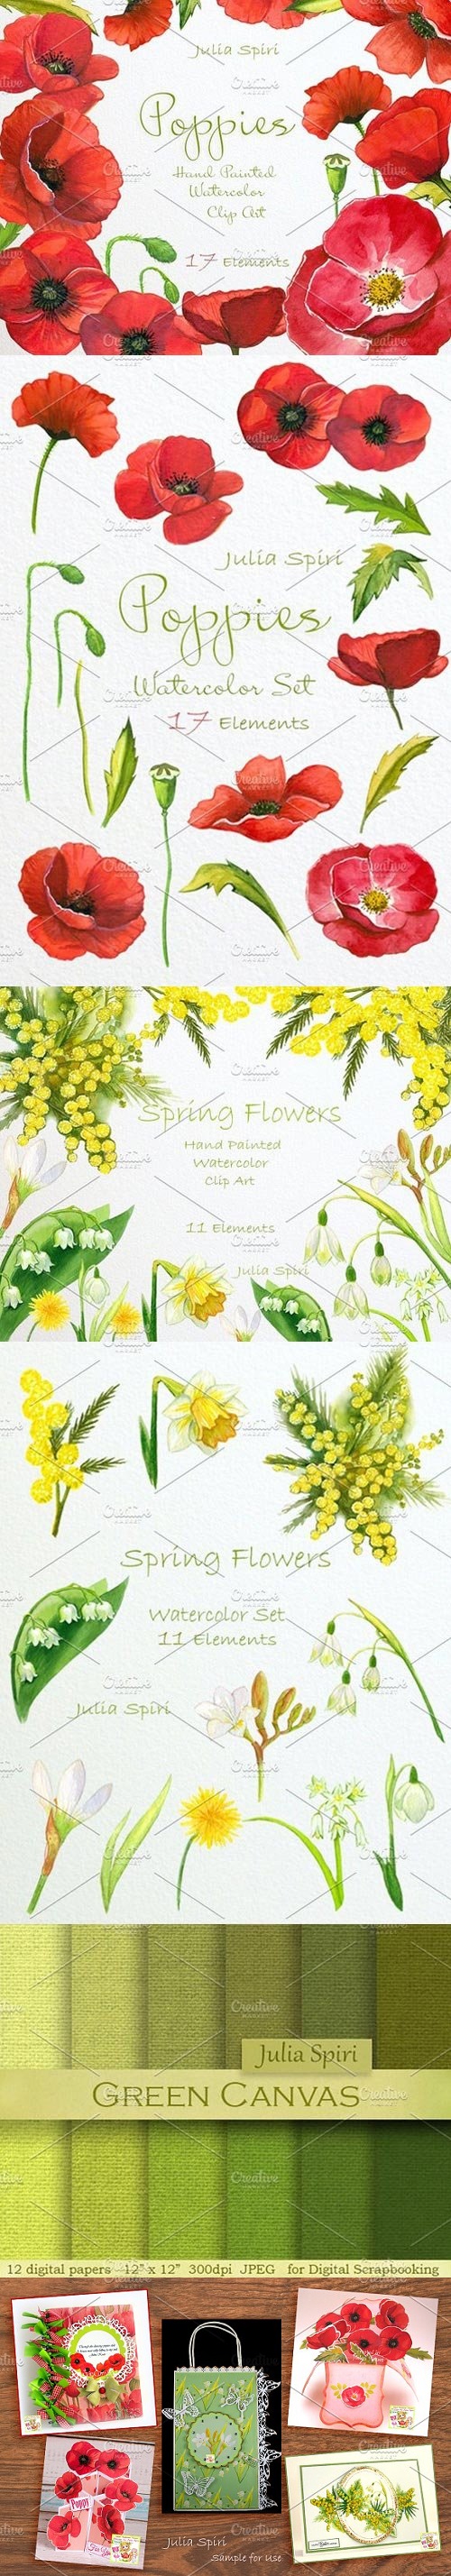 Poppies & Spring Flowers. Watercolor 780415